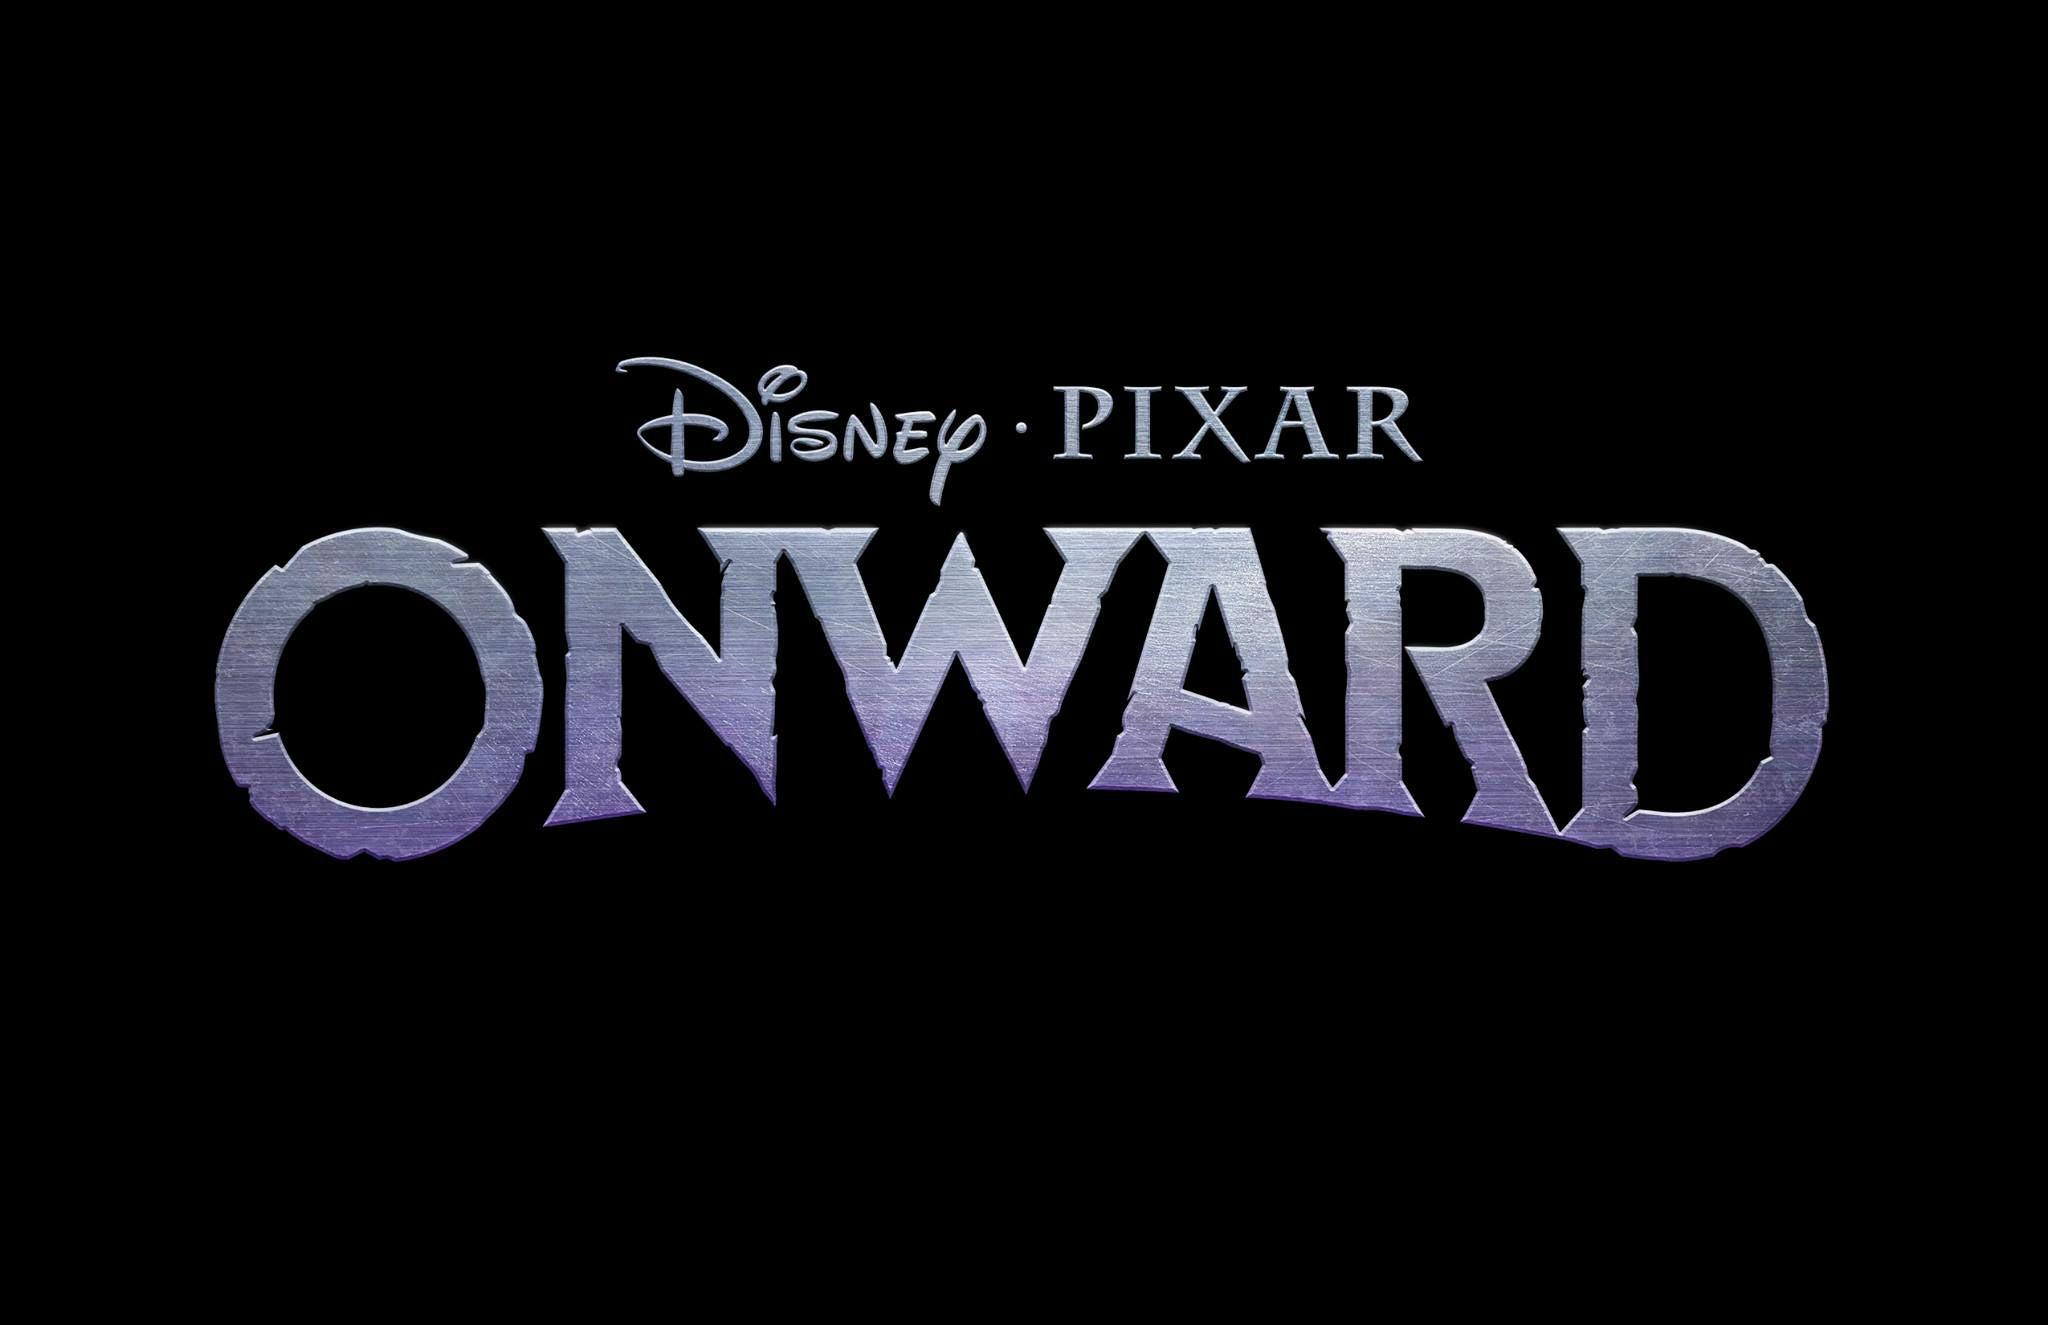 Onward': Disney Pixar announces cast and release date